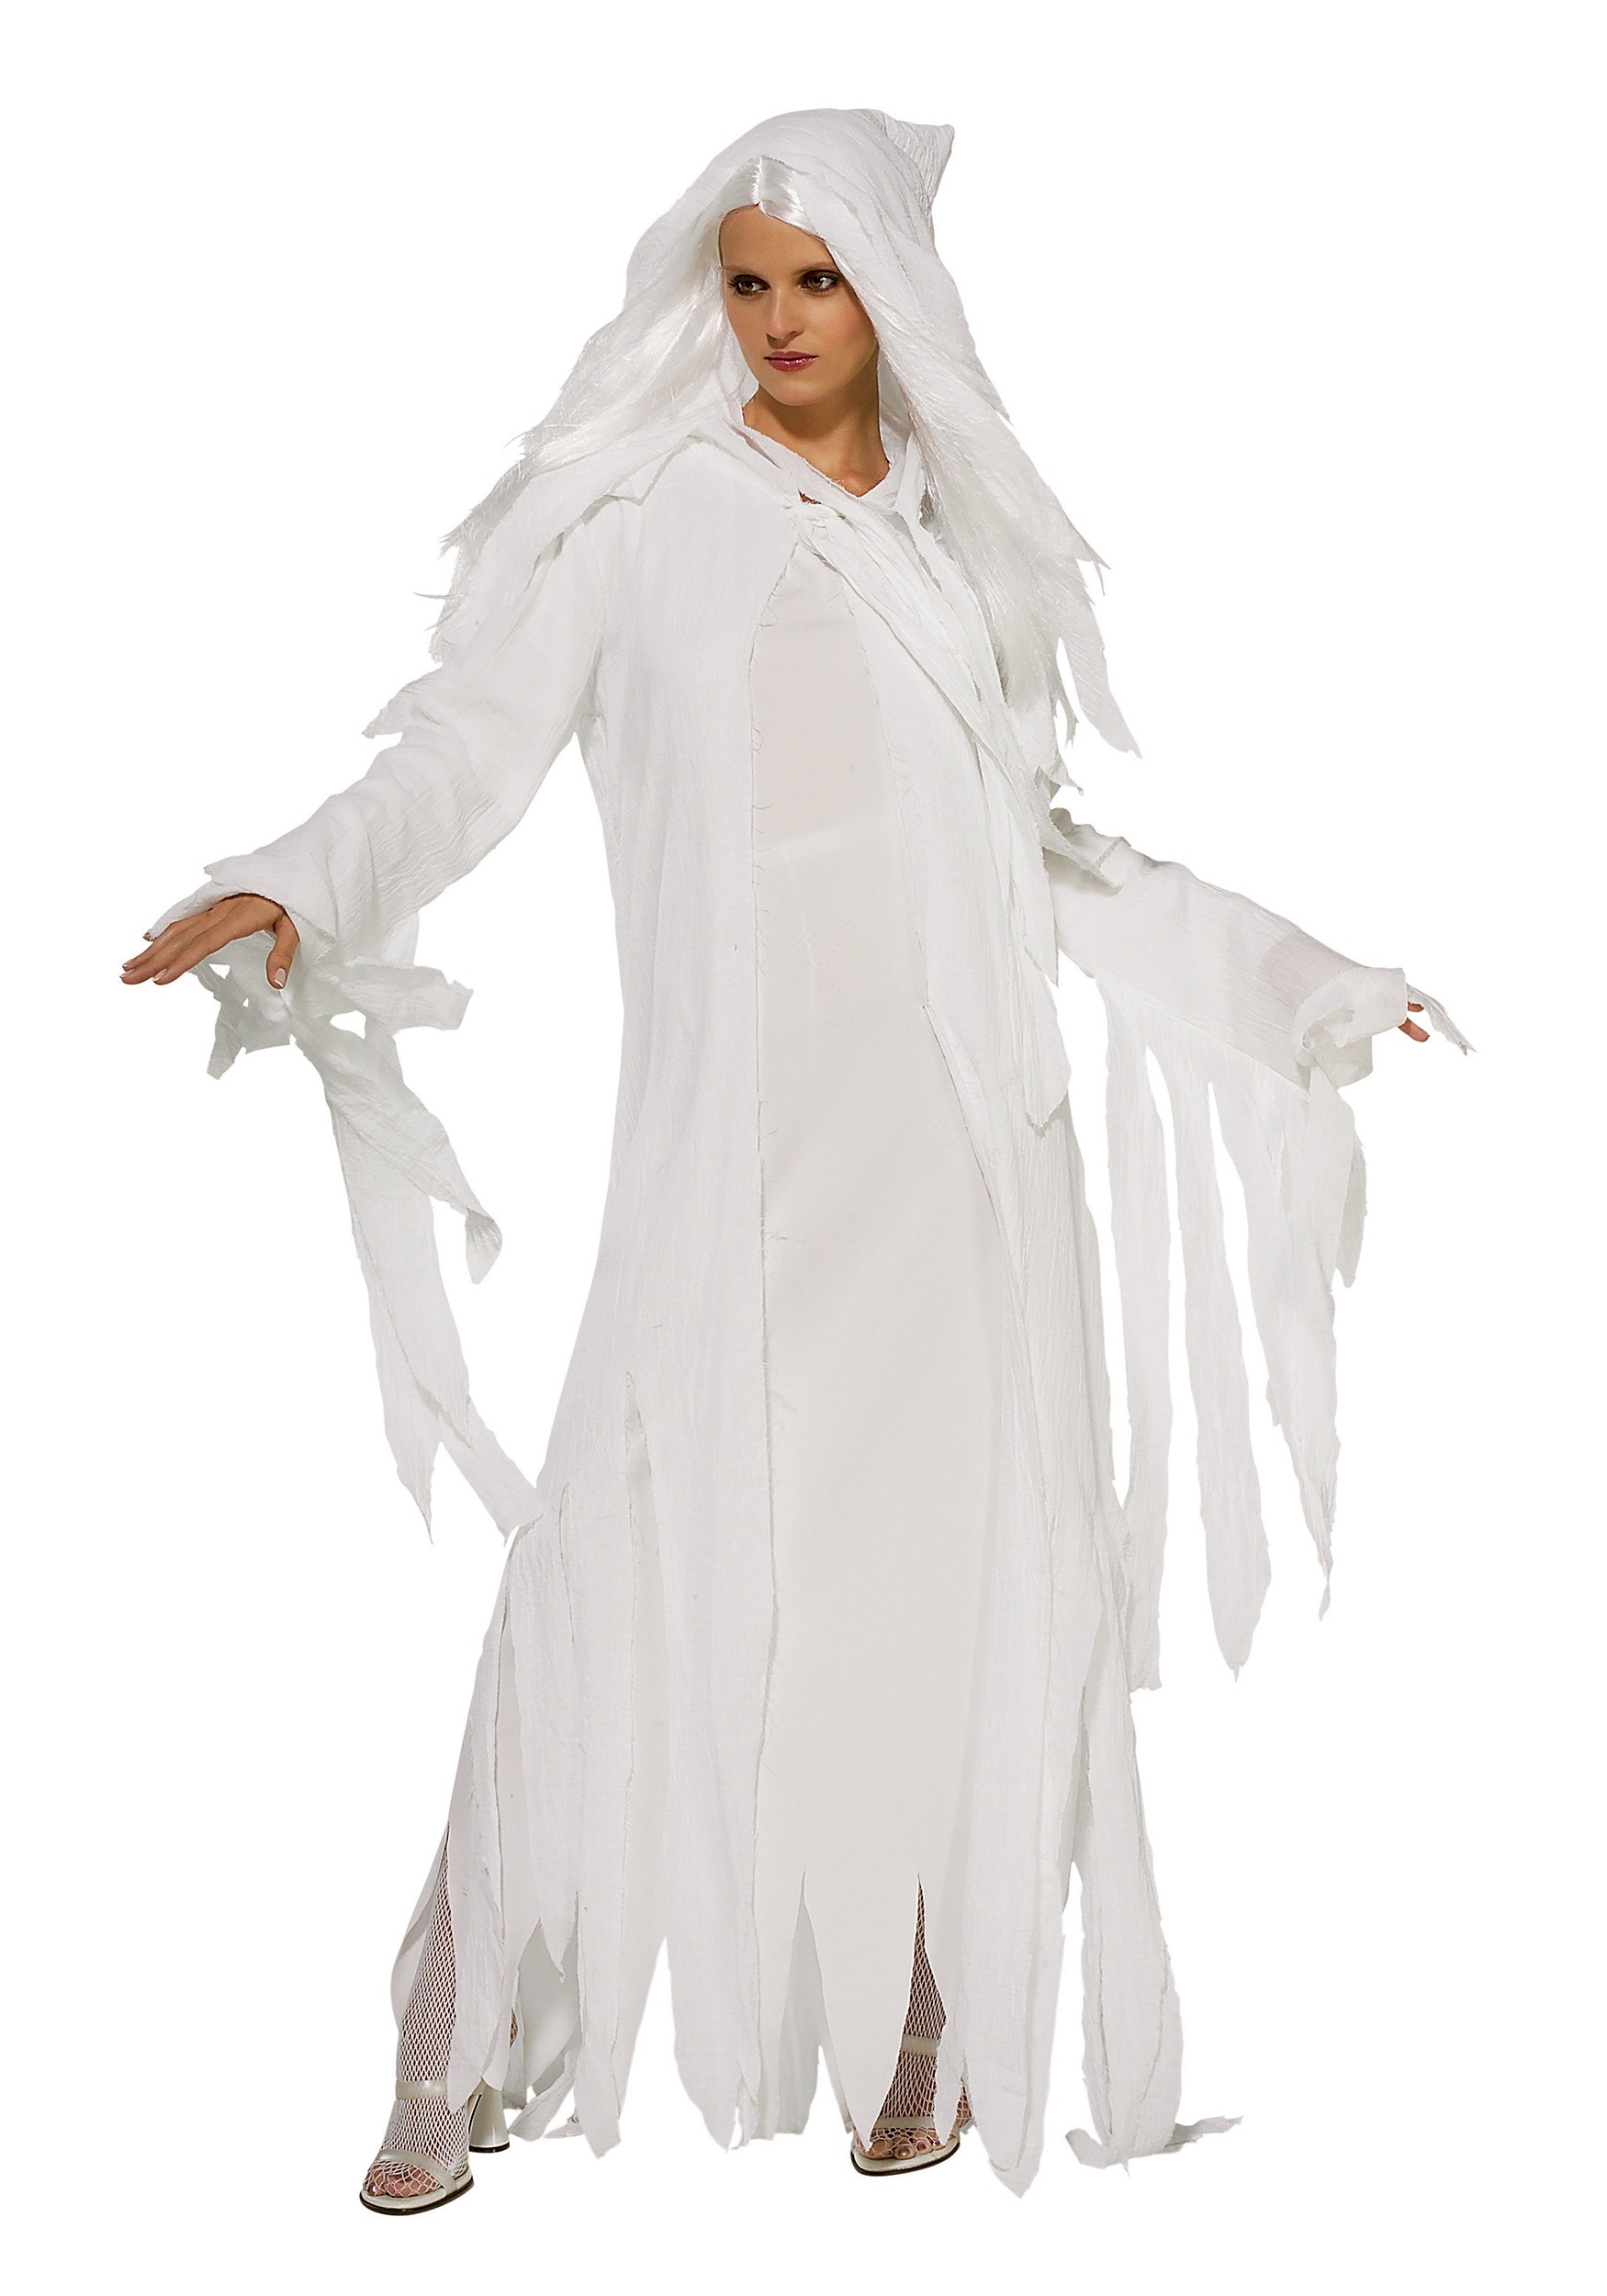 Ghostly Spirit Women's Fancy Dress Costume